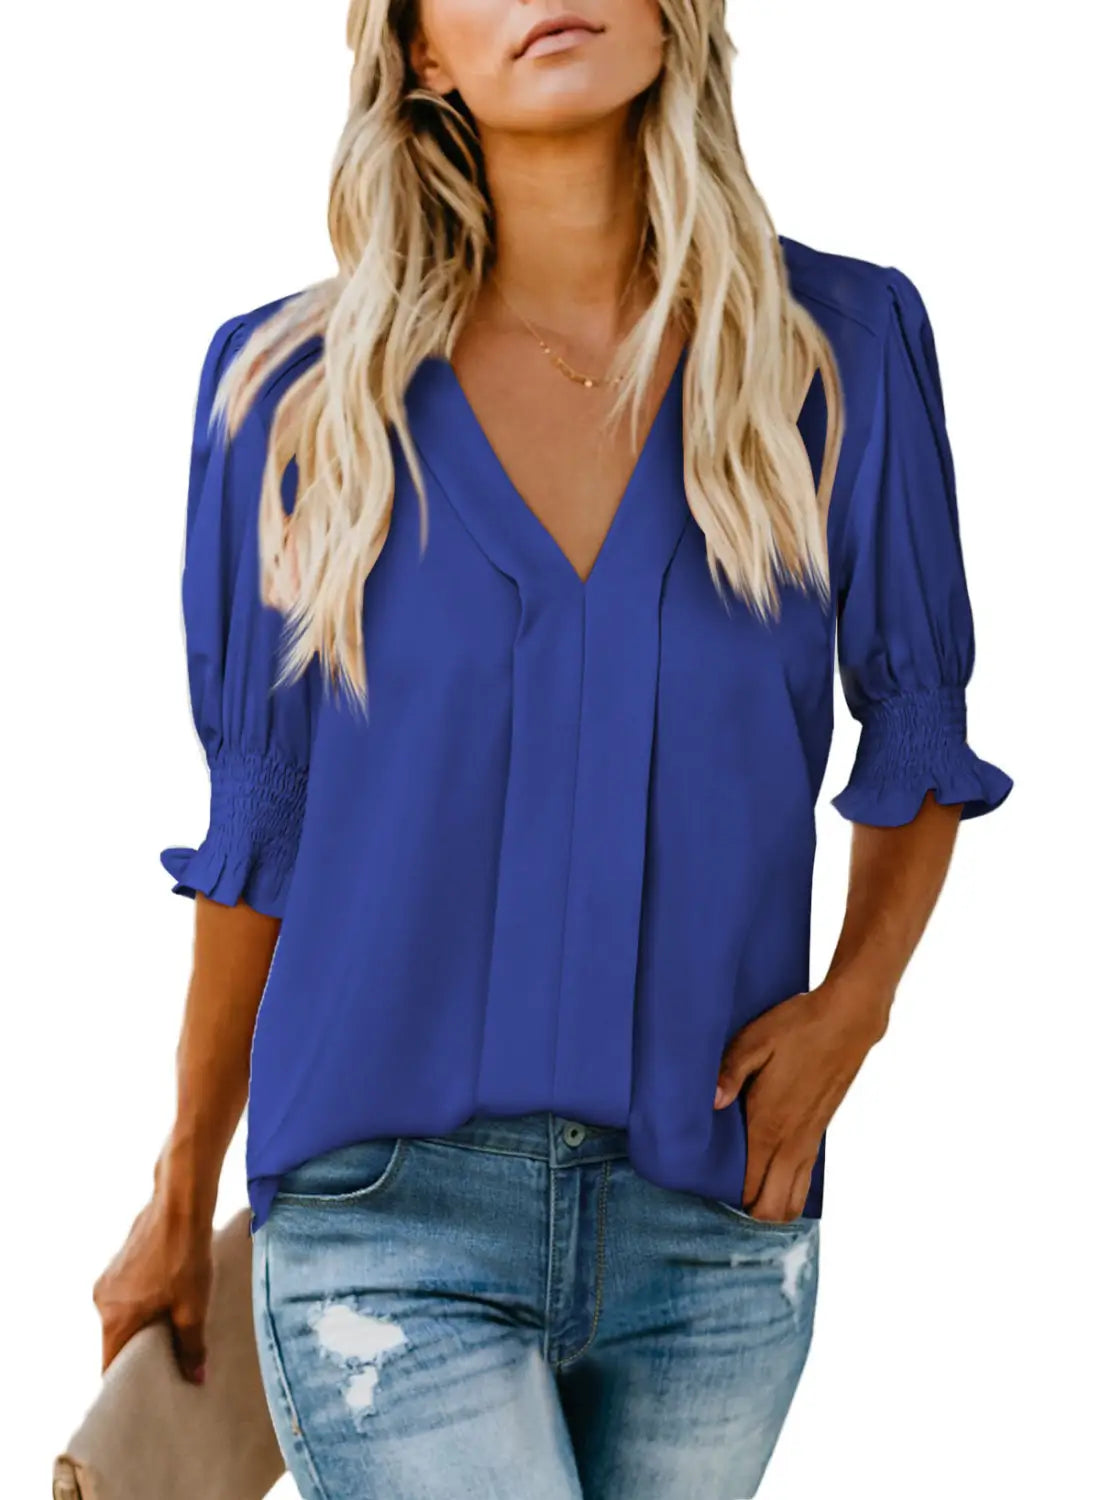 Purple solid color half sleeve v neck blouse - tops